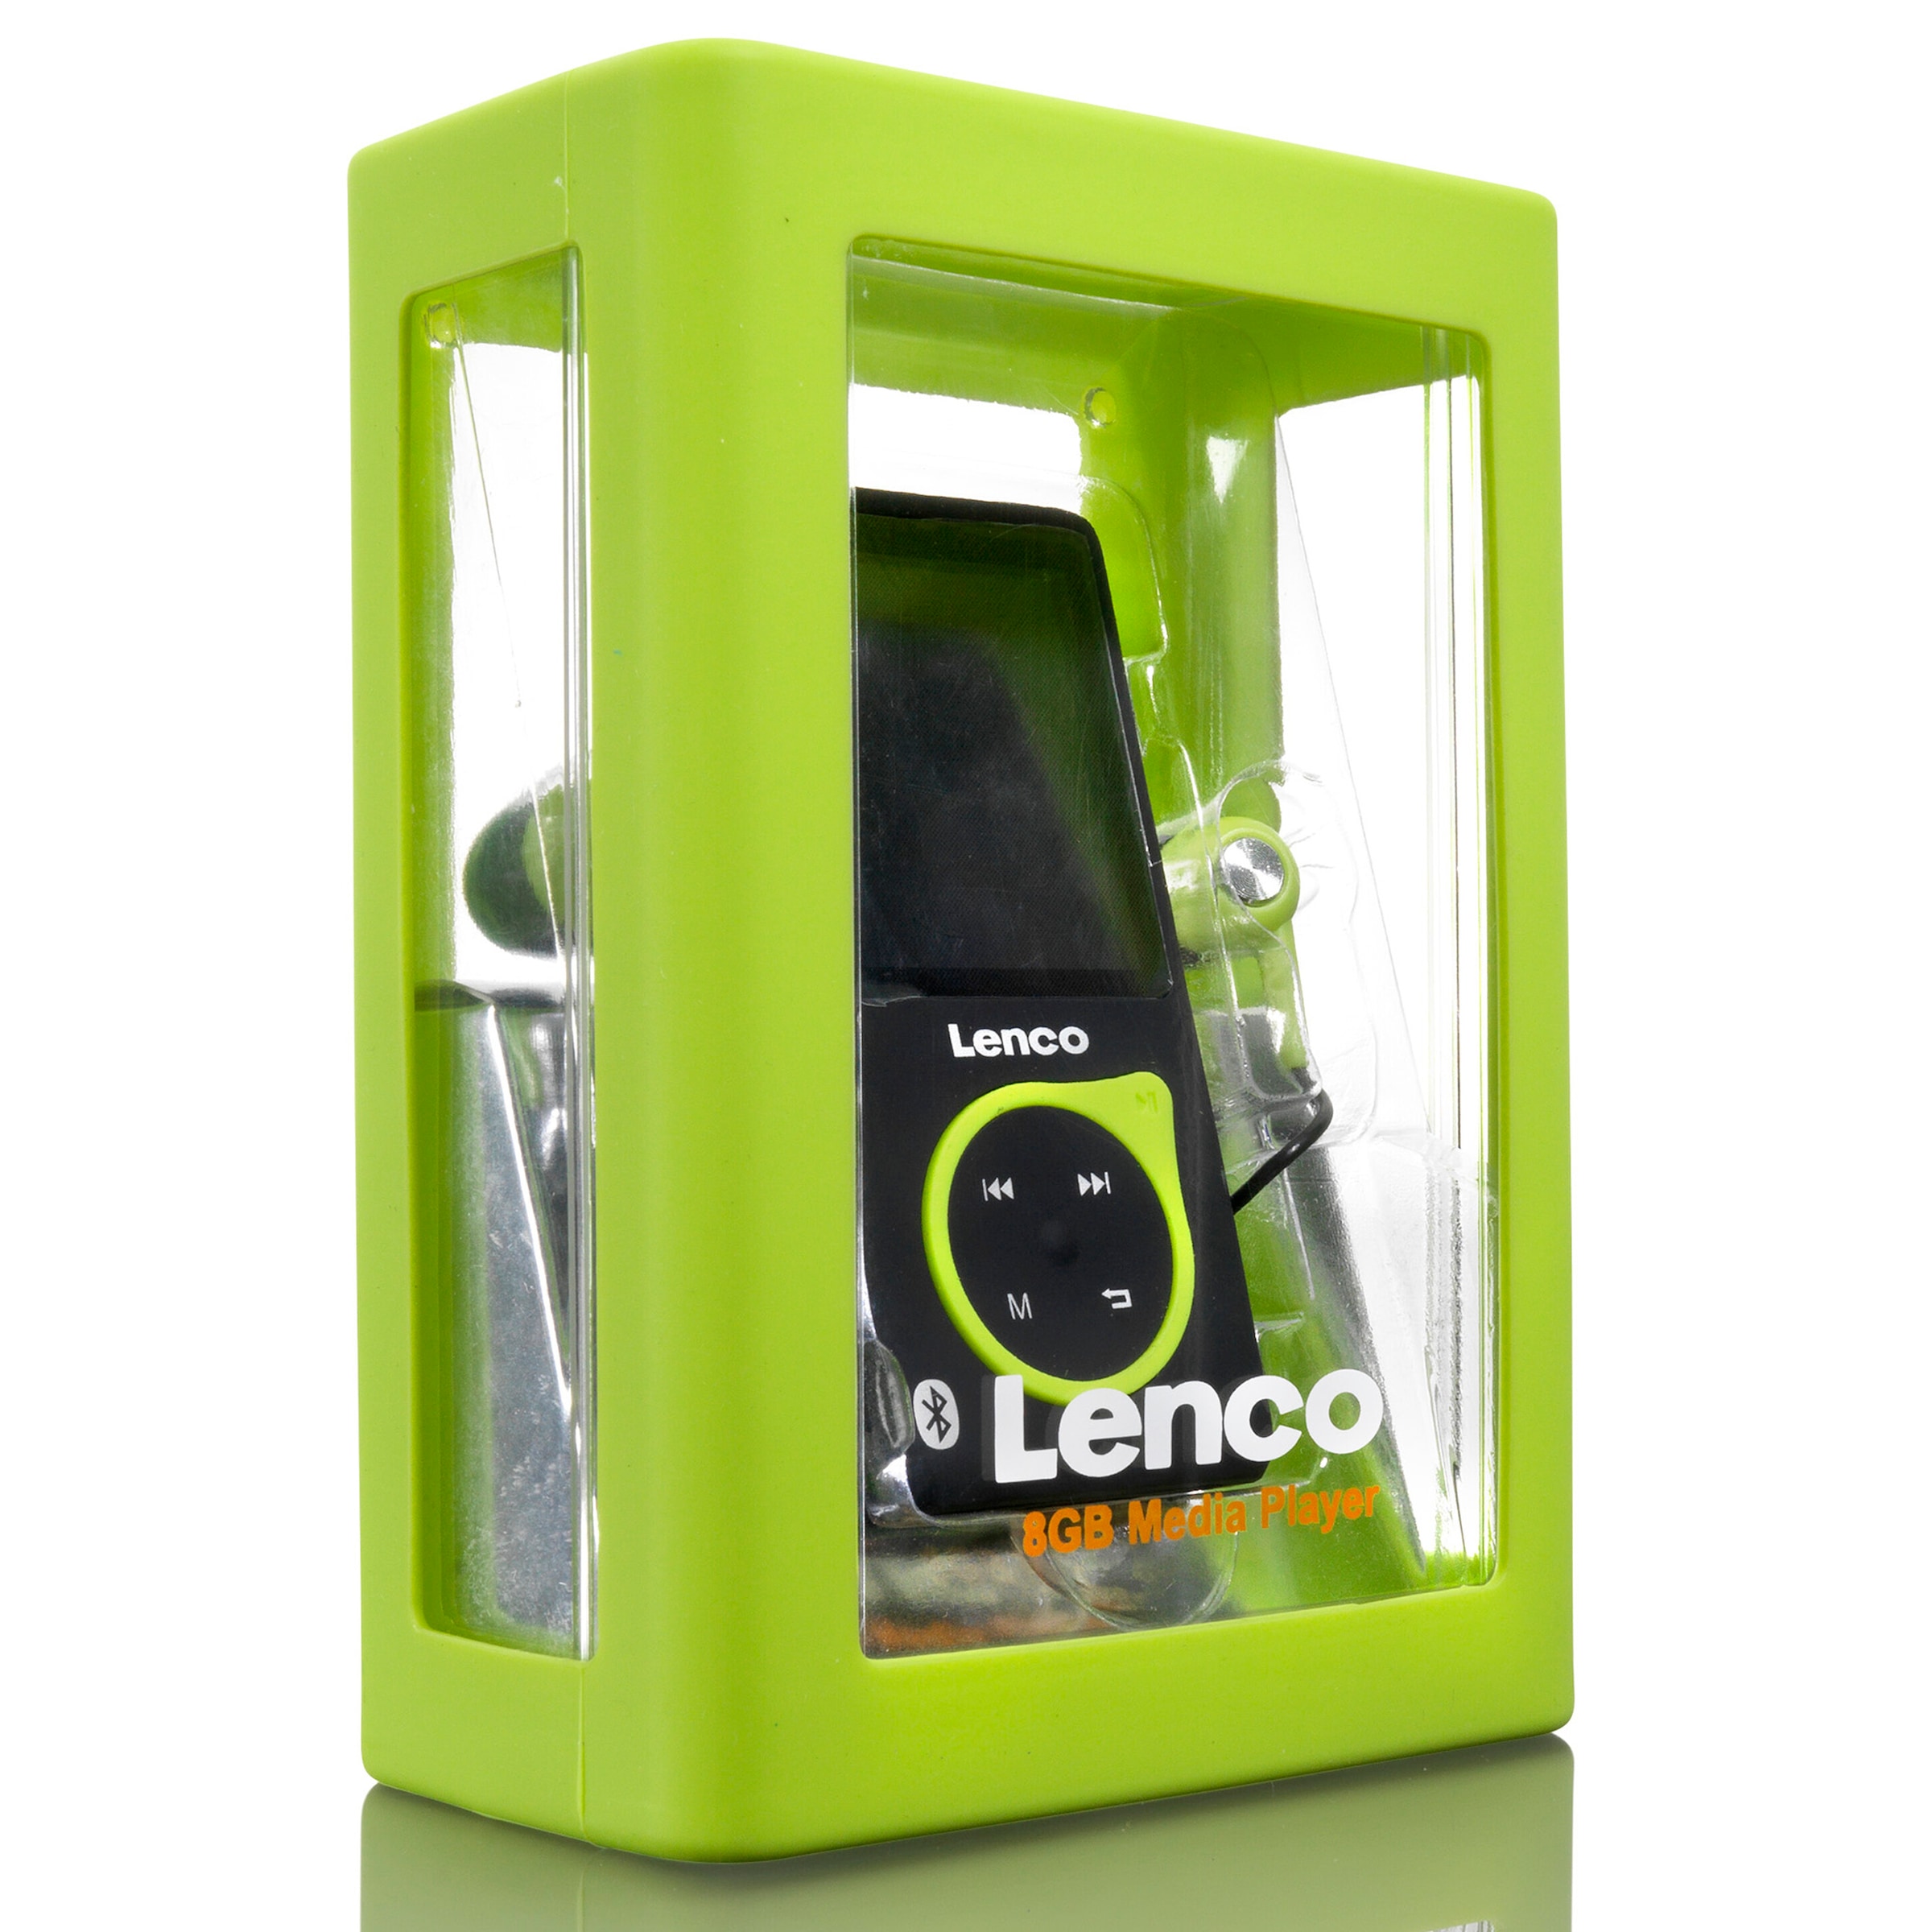 Lenco MP3-Player »Xemio-768 bei 8GB-Speicherkarte, lime«, Bluetooth